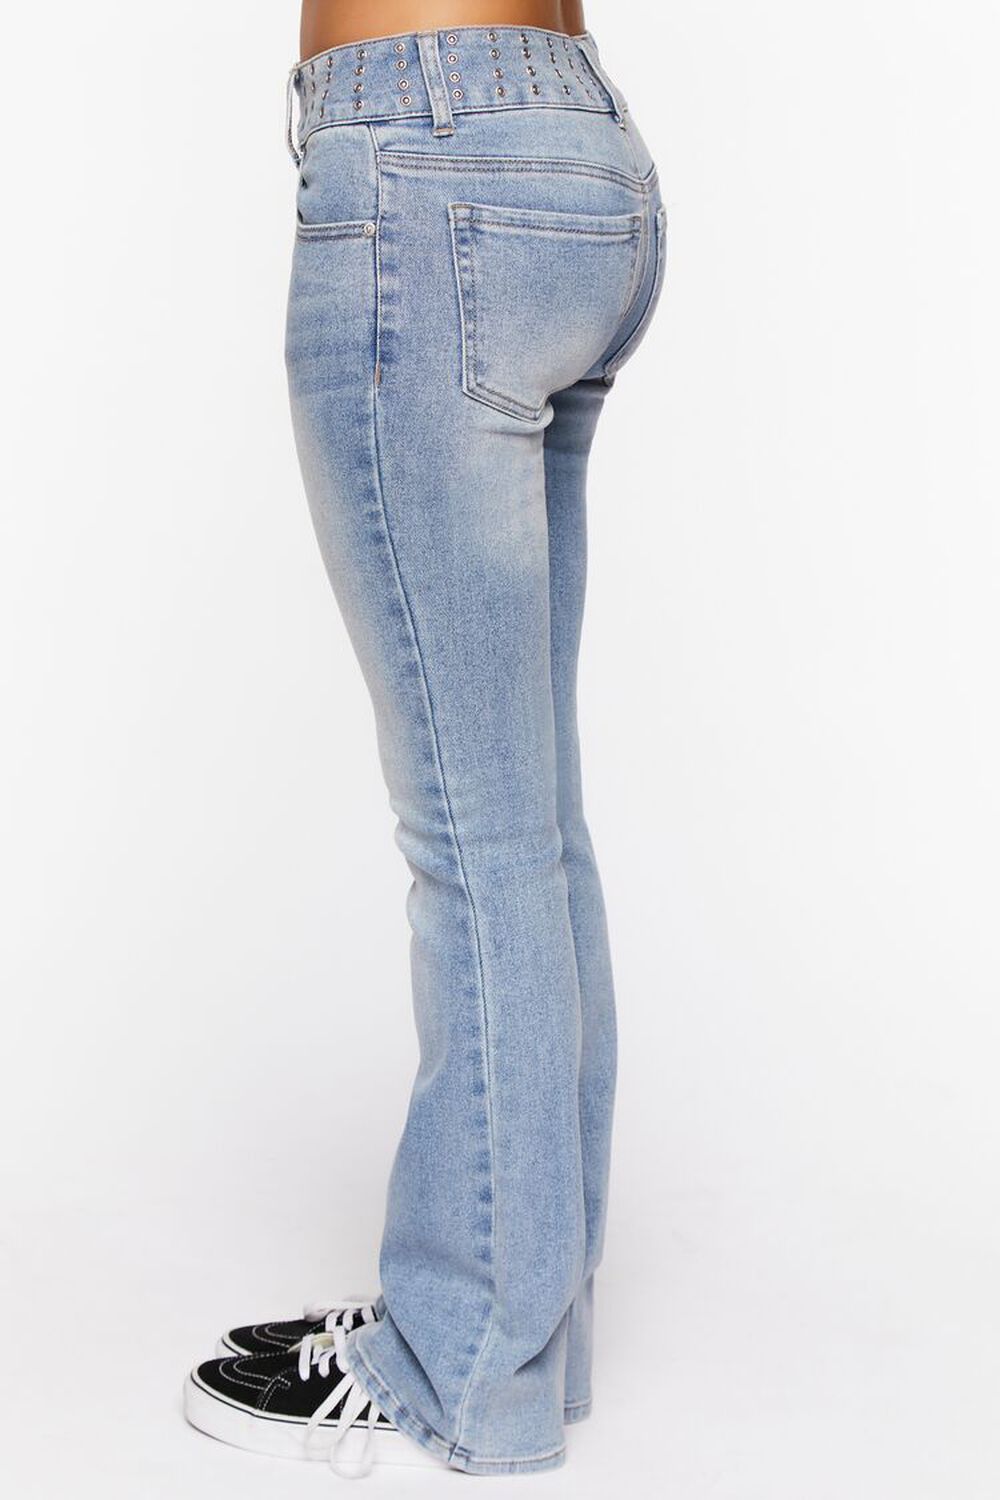 LIGHT DENIM Studded Mid-Rise Bootcut Jeans, image 3